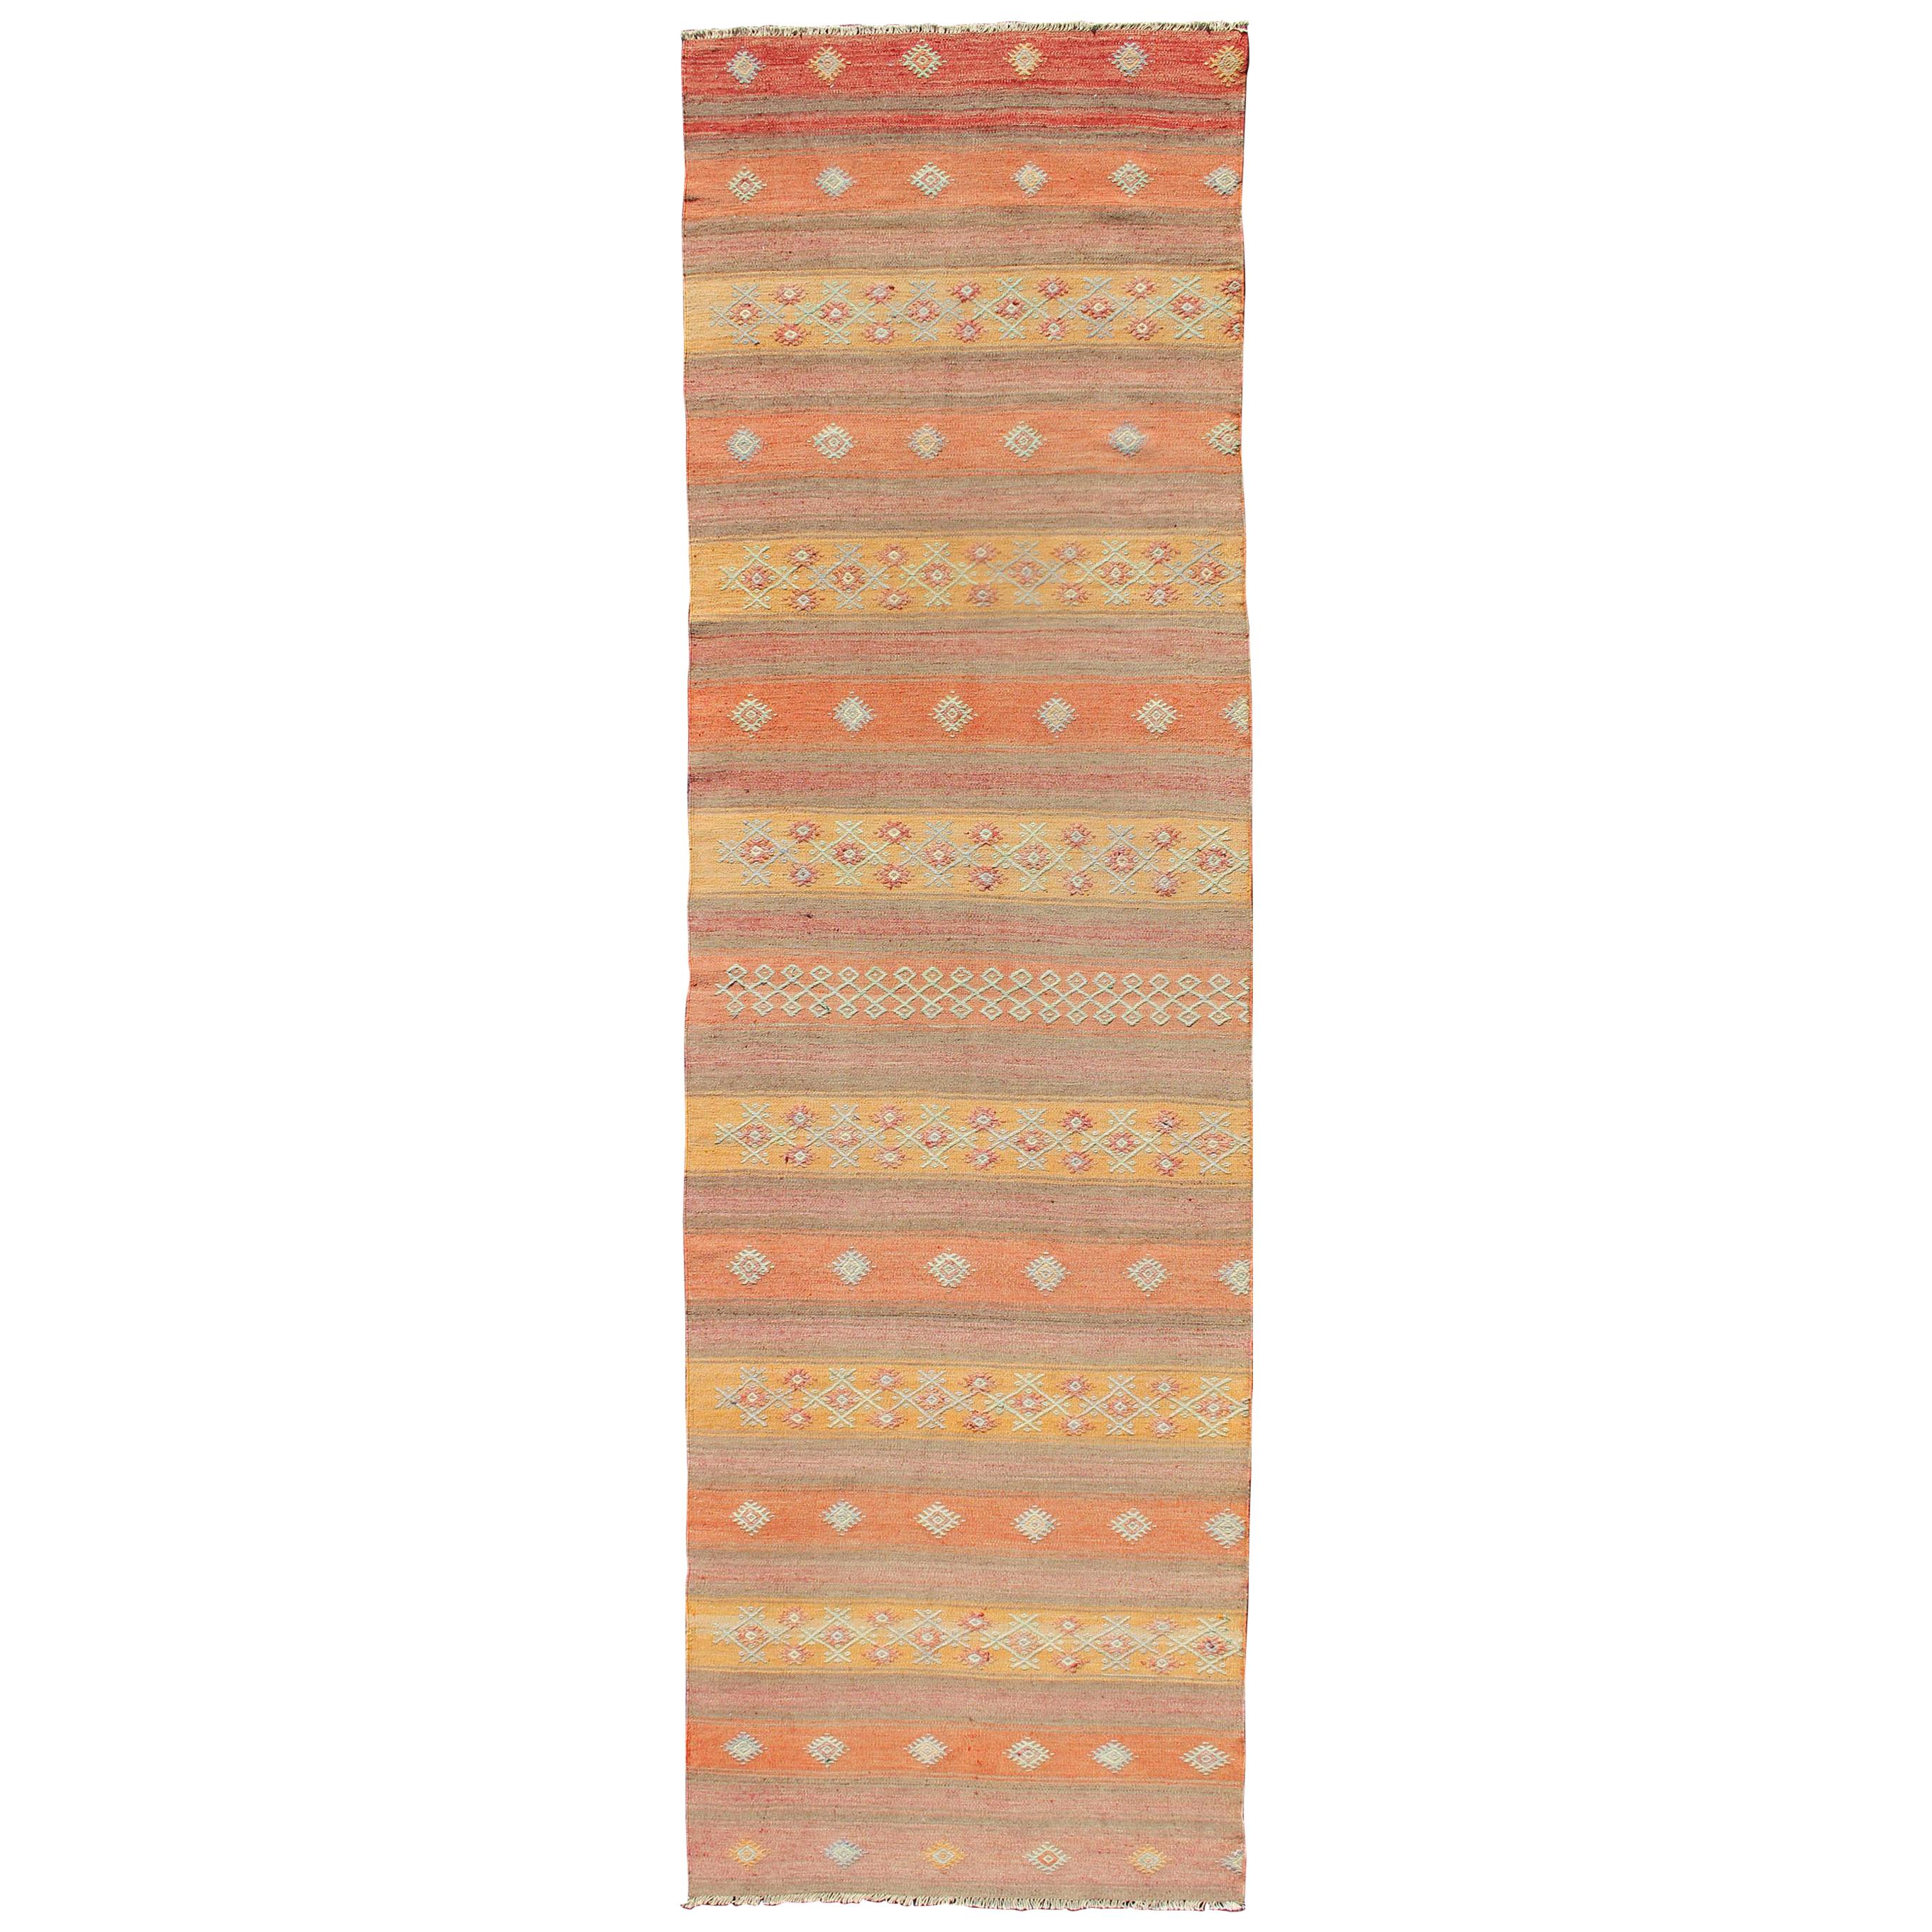 Colorful Vintage Turkish Kilim Rug with Horizontal Stripes and Geometric Shapes